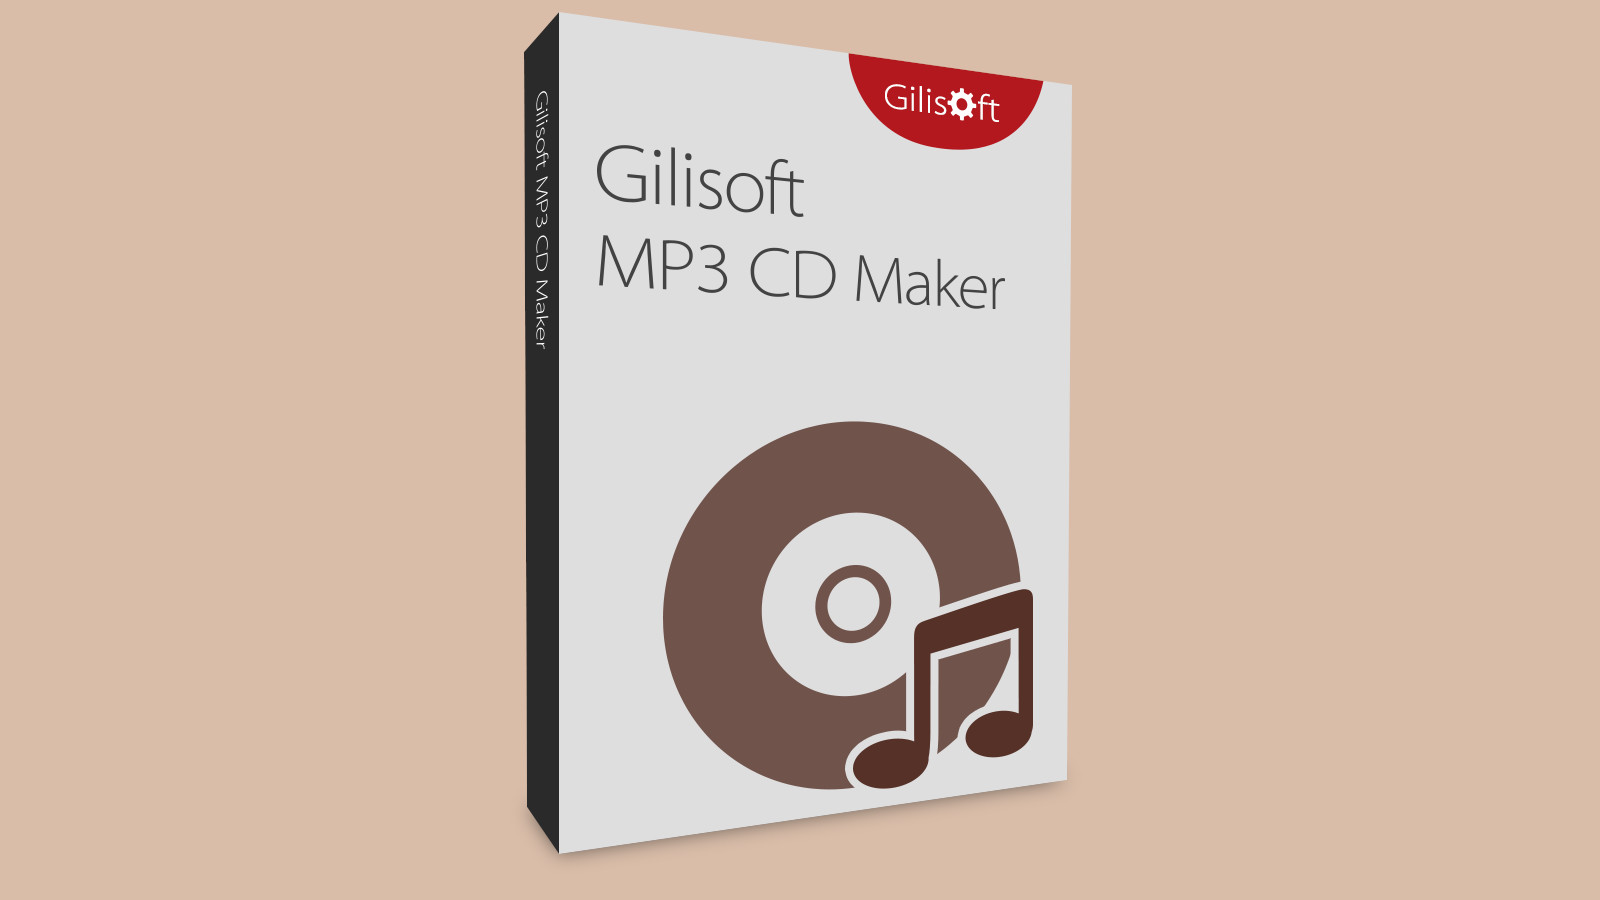 [$ 5.65] Gilisoft MP3 CD Maker CD Key